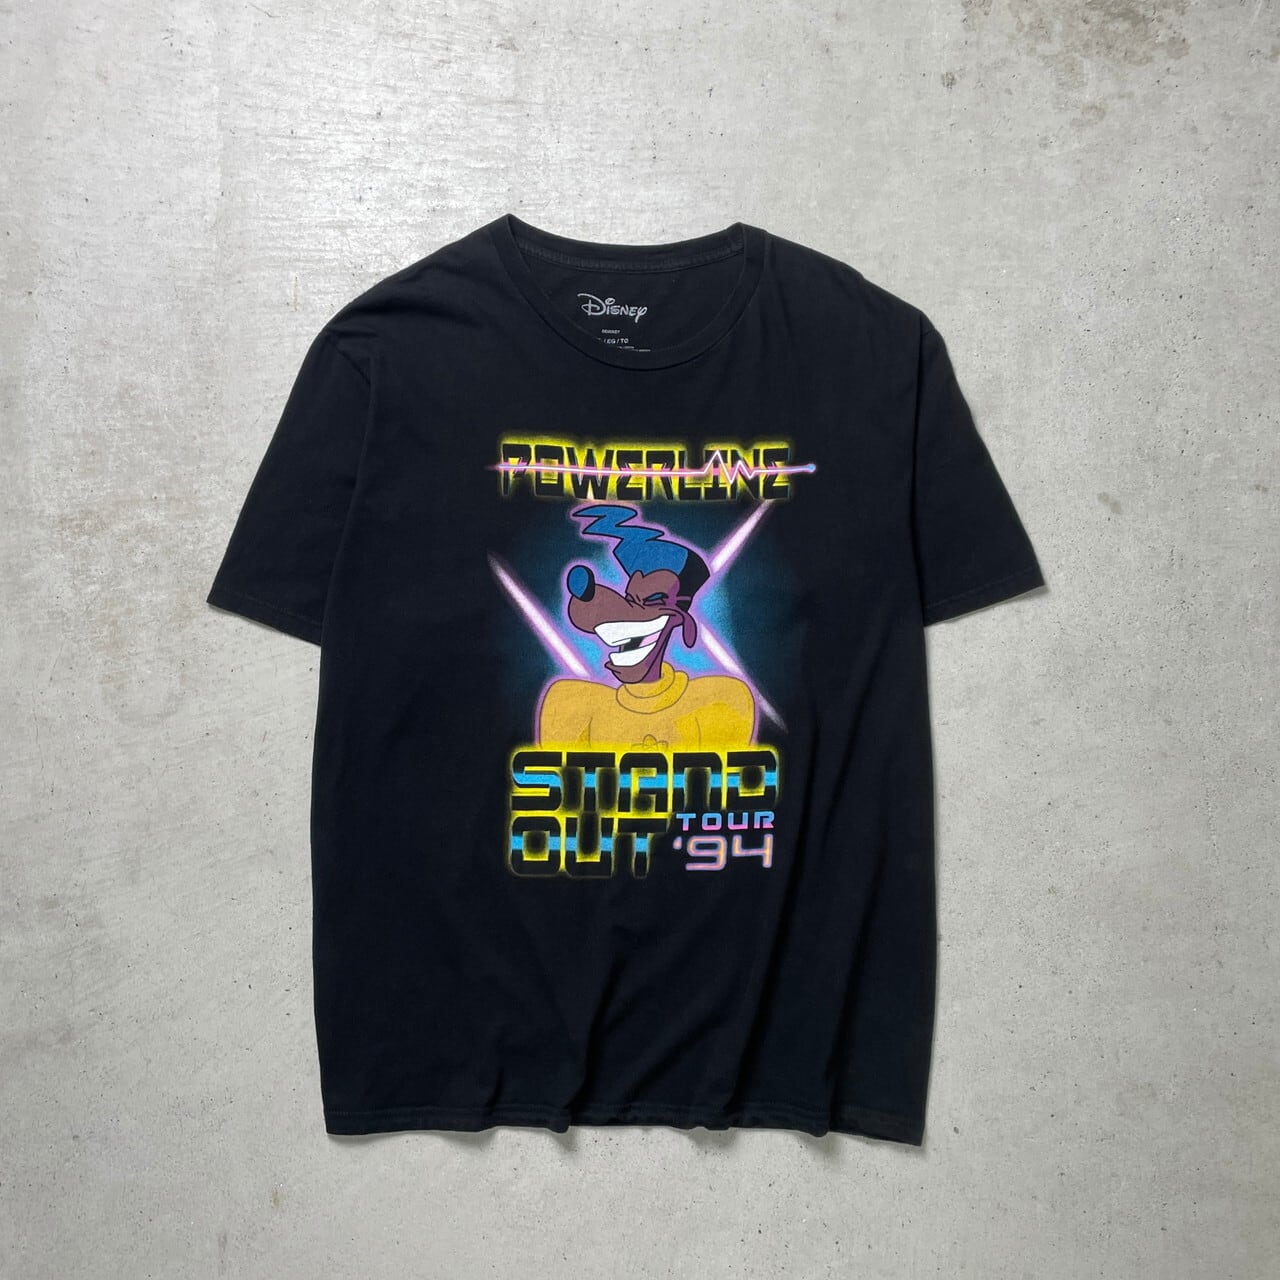 Disney ディズニーPOWER LINE STANDOUT TOUR '94 キャラクタープリントTシャツ メンズXL 古着